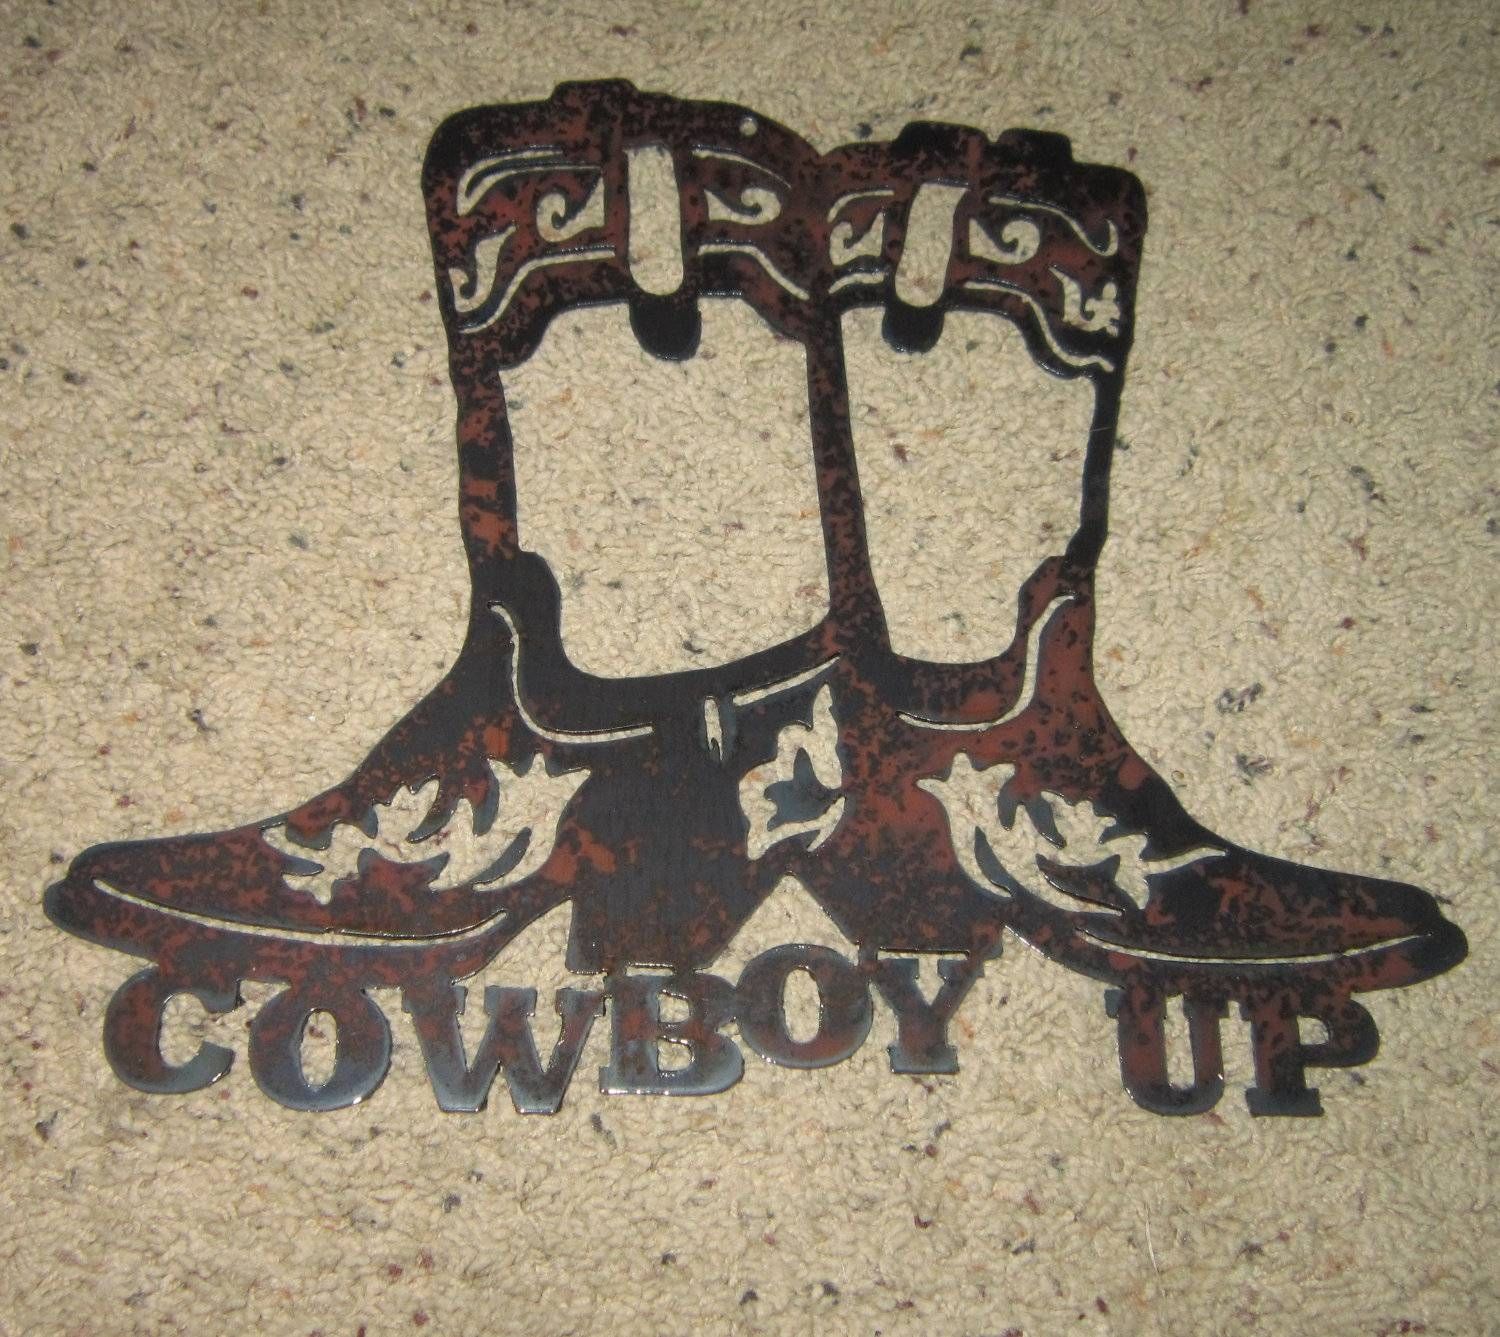 Cowboy Up Metal Art Cowboy Art Western Art Country Home For Recent Cowboy Metal Wall Art (View 5 of 20)